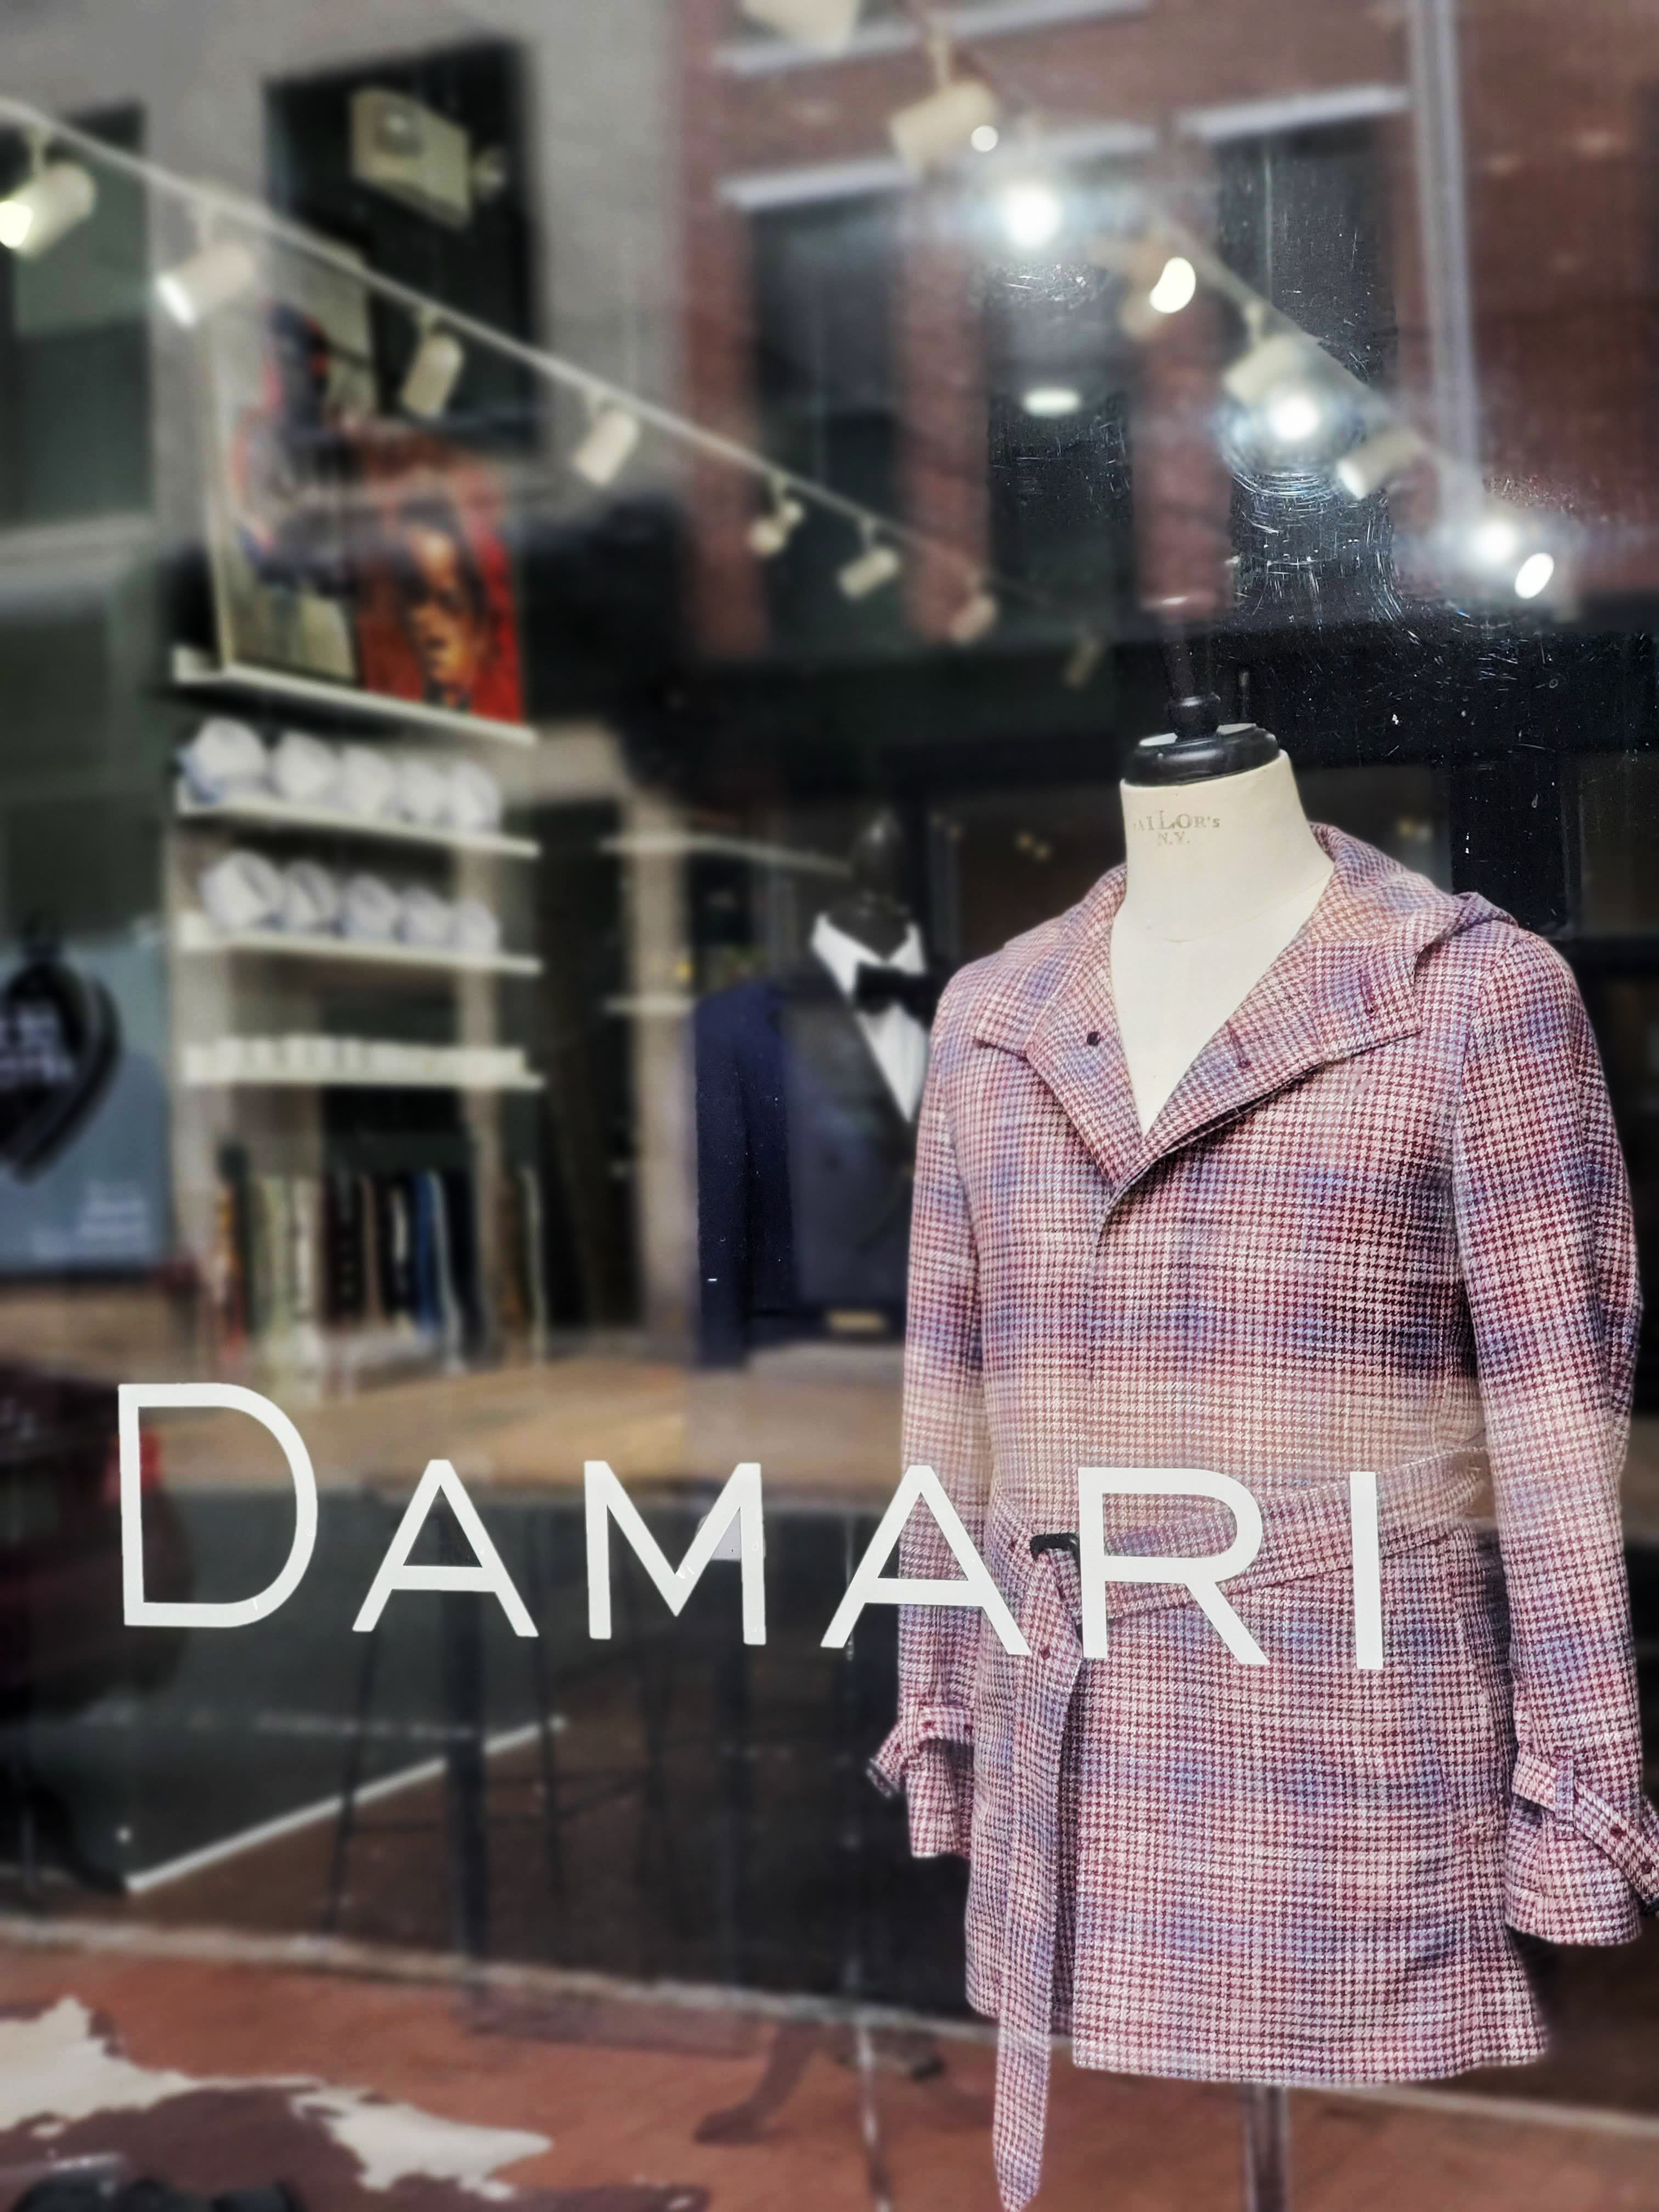 Clothing on display in Damari front window